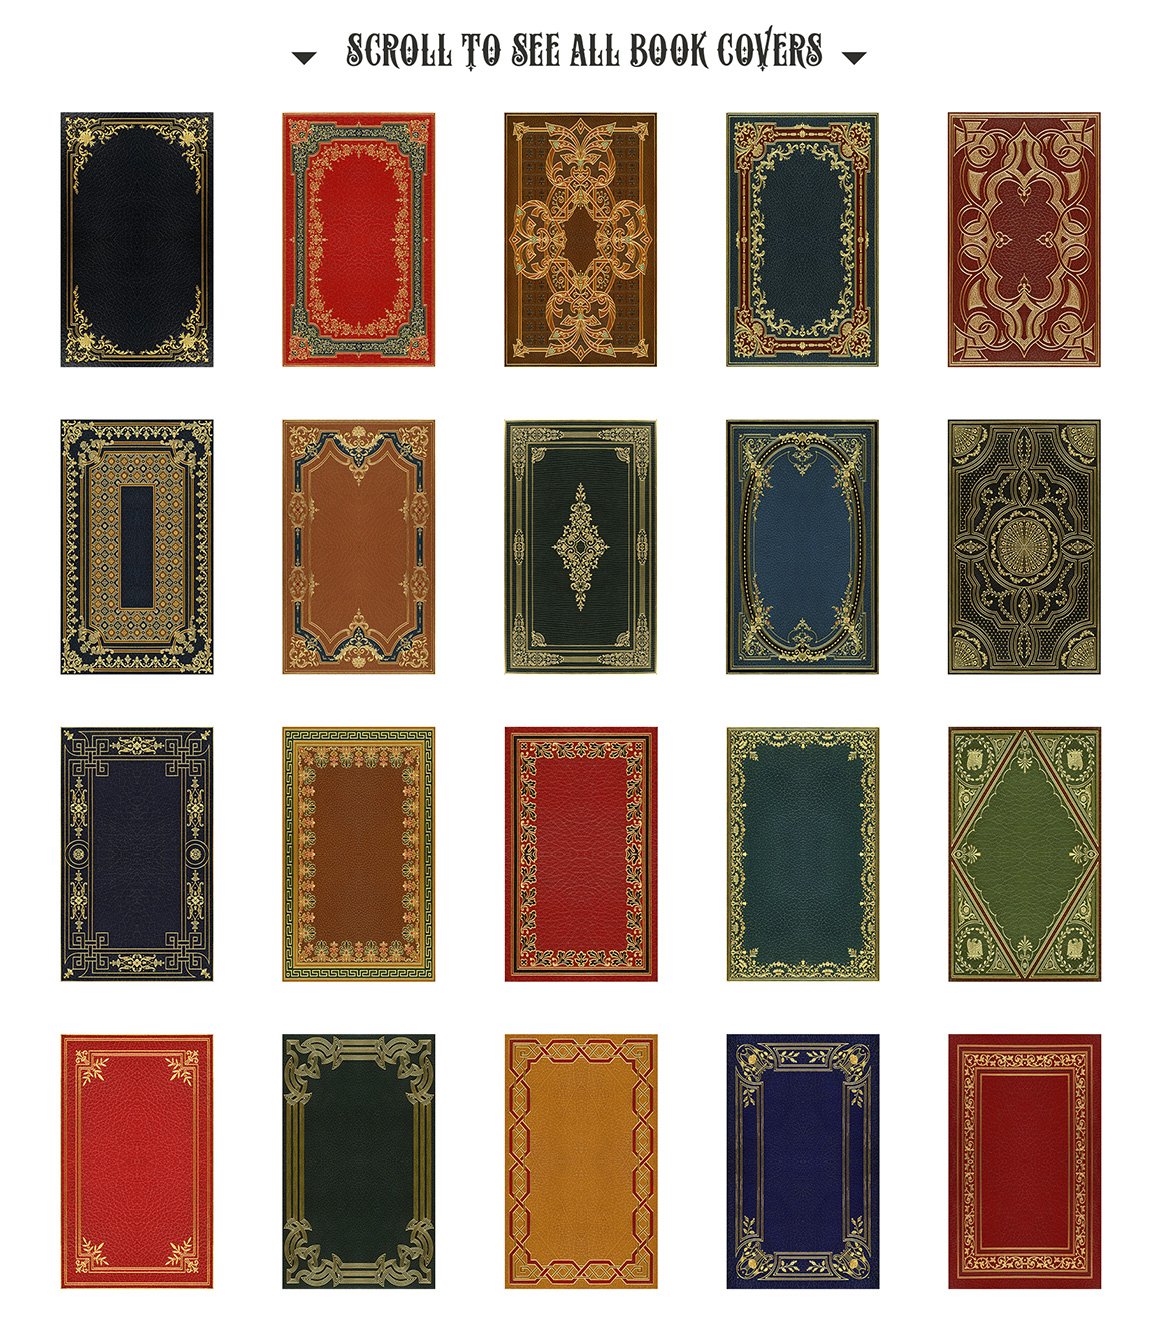 20 Decorative Book Covers